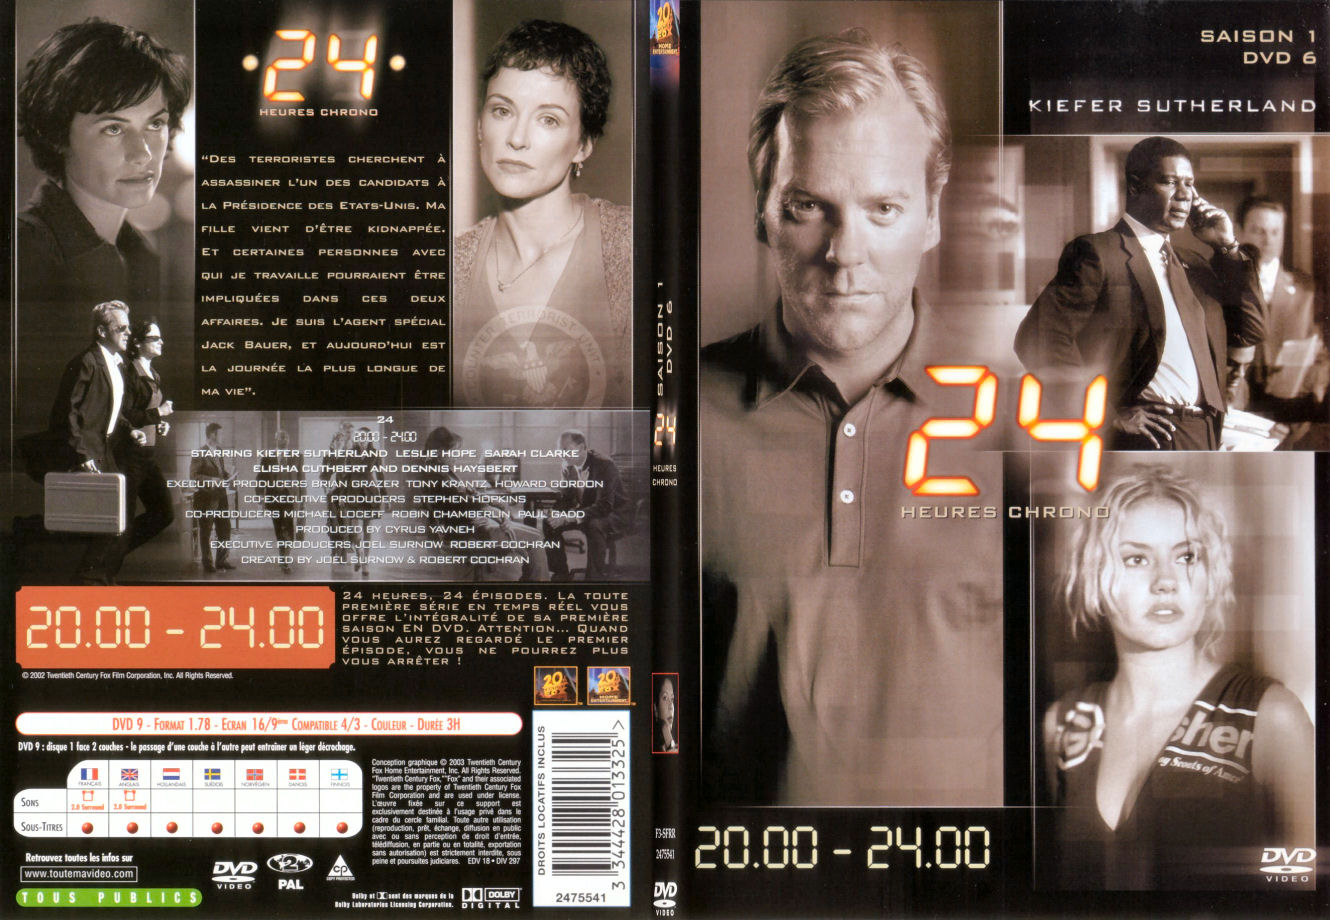 Jaquette DVD 24 heures chrono Saison 1 dvd 6 - SLIM